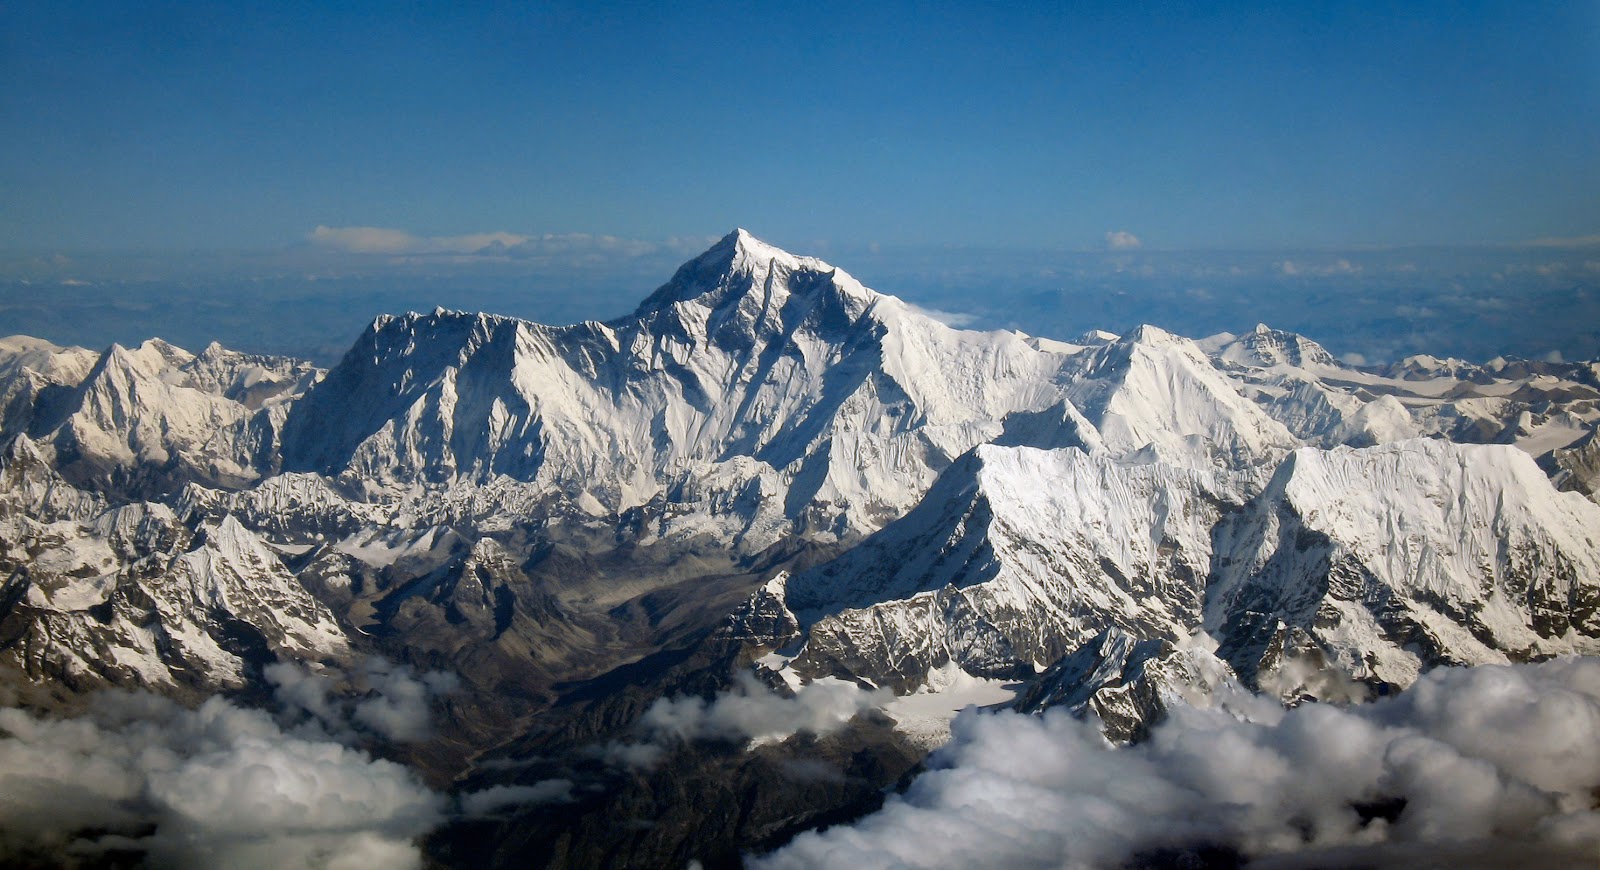 https://upload.wikimedia.org/wikipedia/commons/d/d1/Mount_Everest_as_seen_from_Drukair2_PLW_edit.jpg